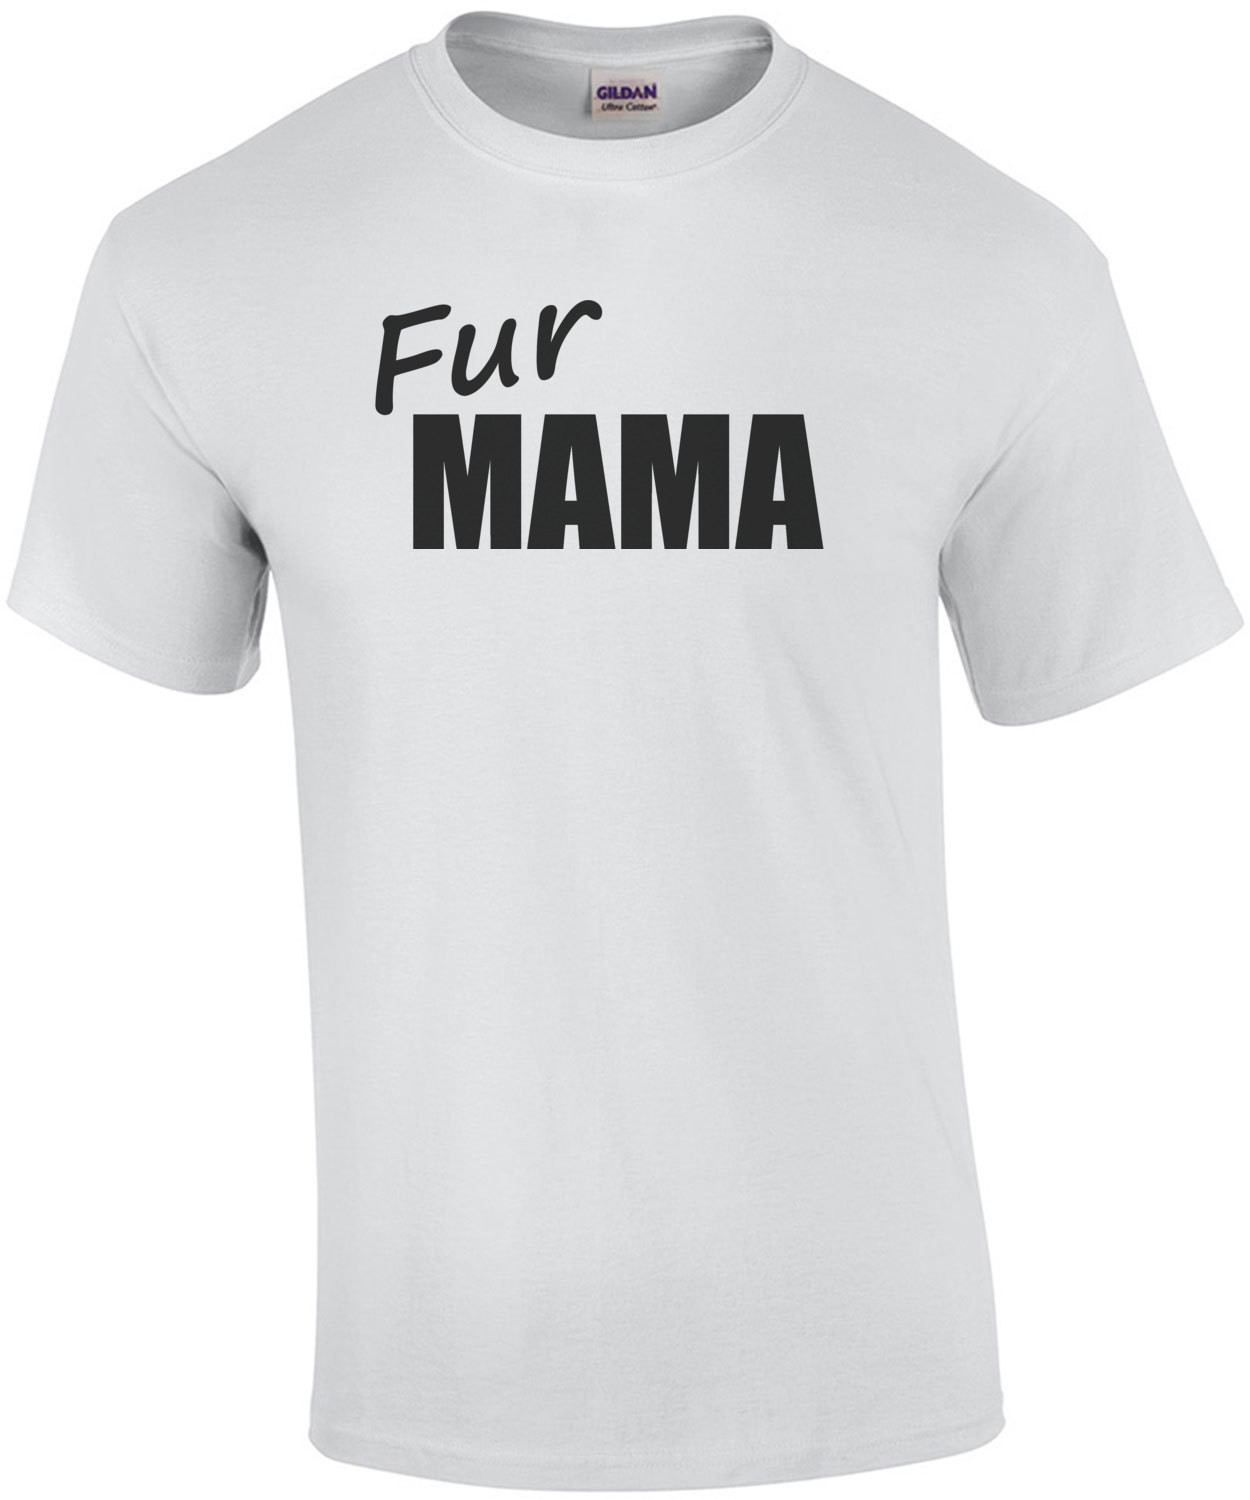 Fur Mama - Funny Dog Lover T-Shirt